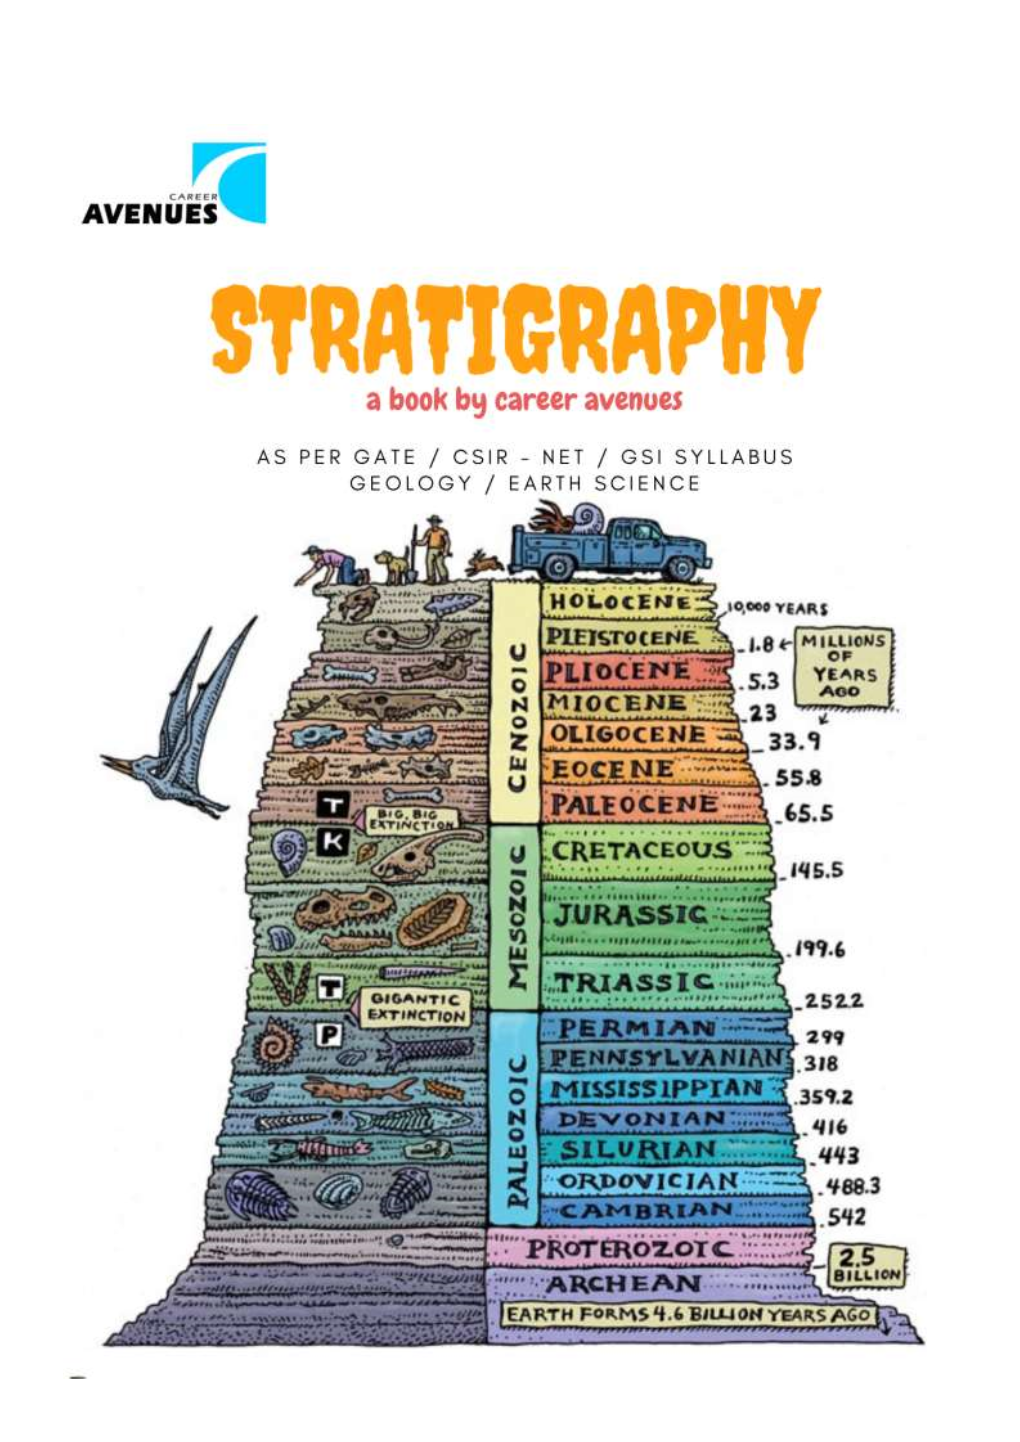 Stratigraphy